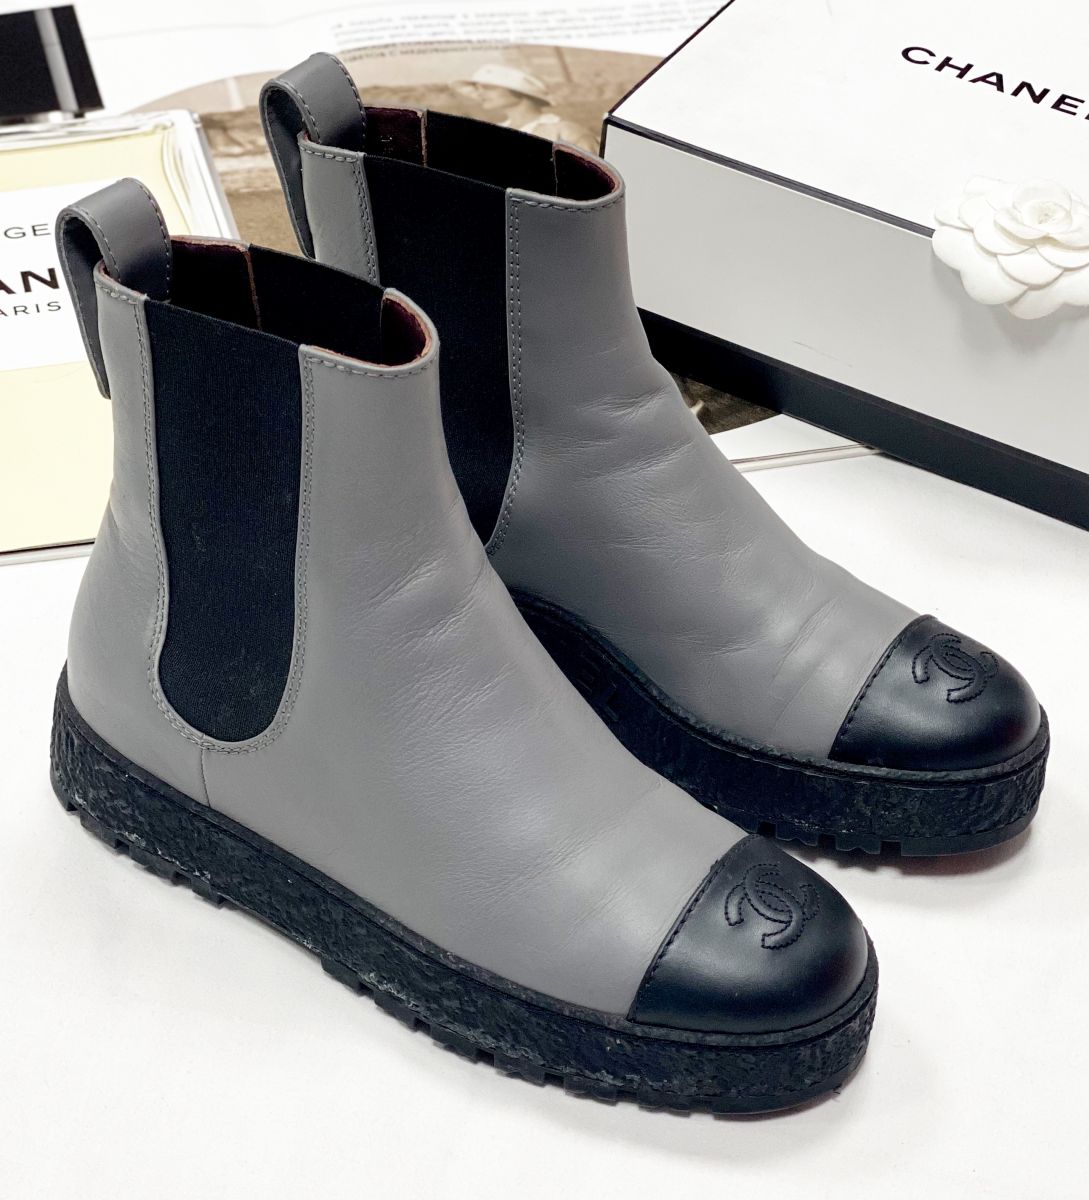 Ботинки Chanel размер 39.5 цена 123 080 руб 